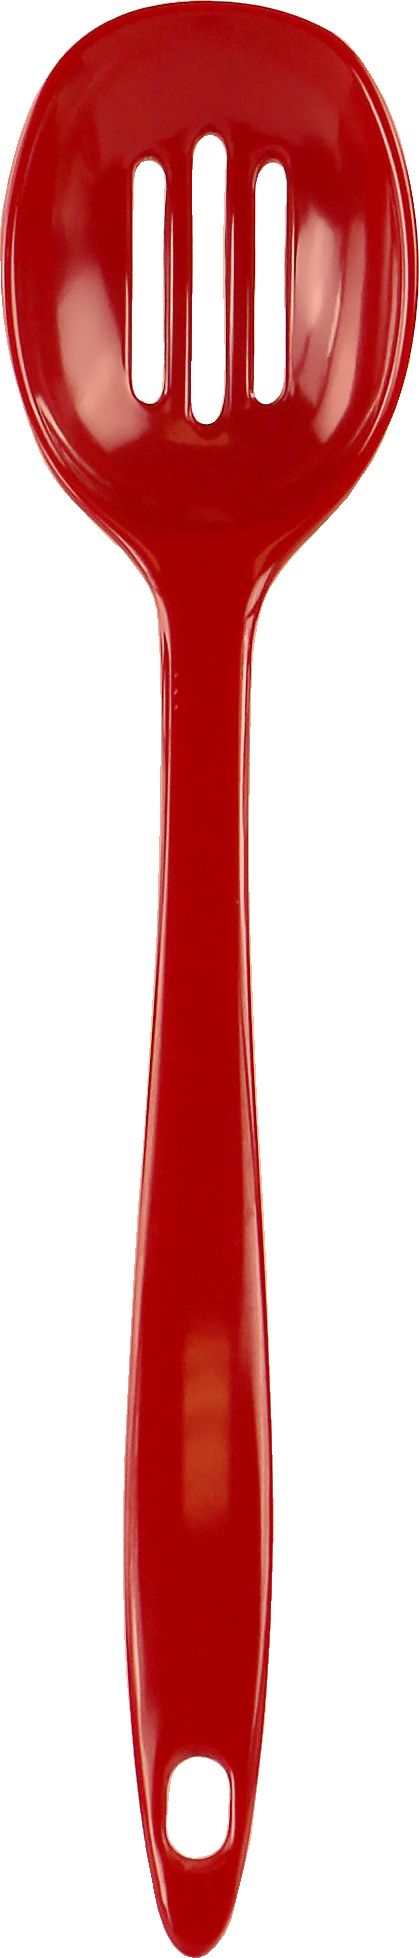 98360 Calypso Basics Melamine Slotted Spoon - Red